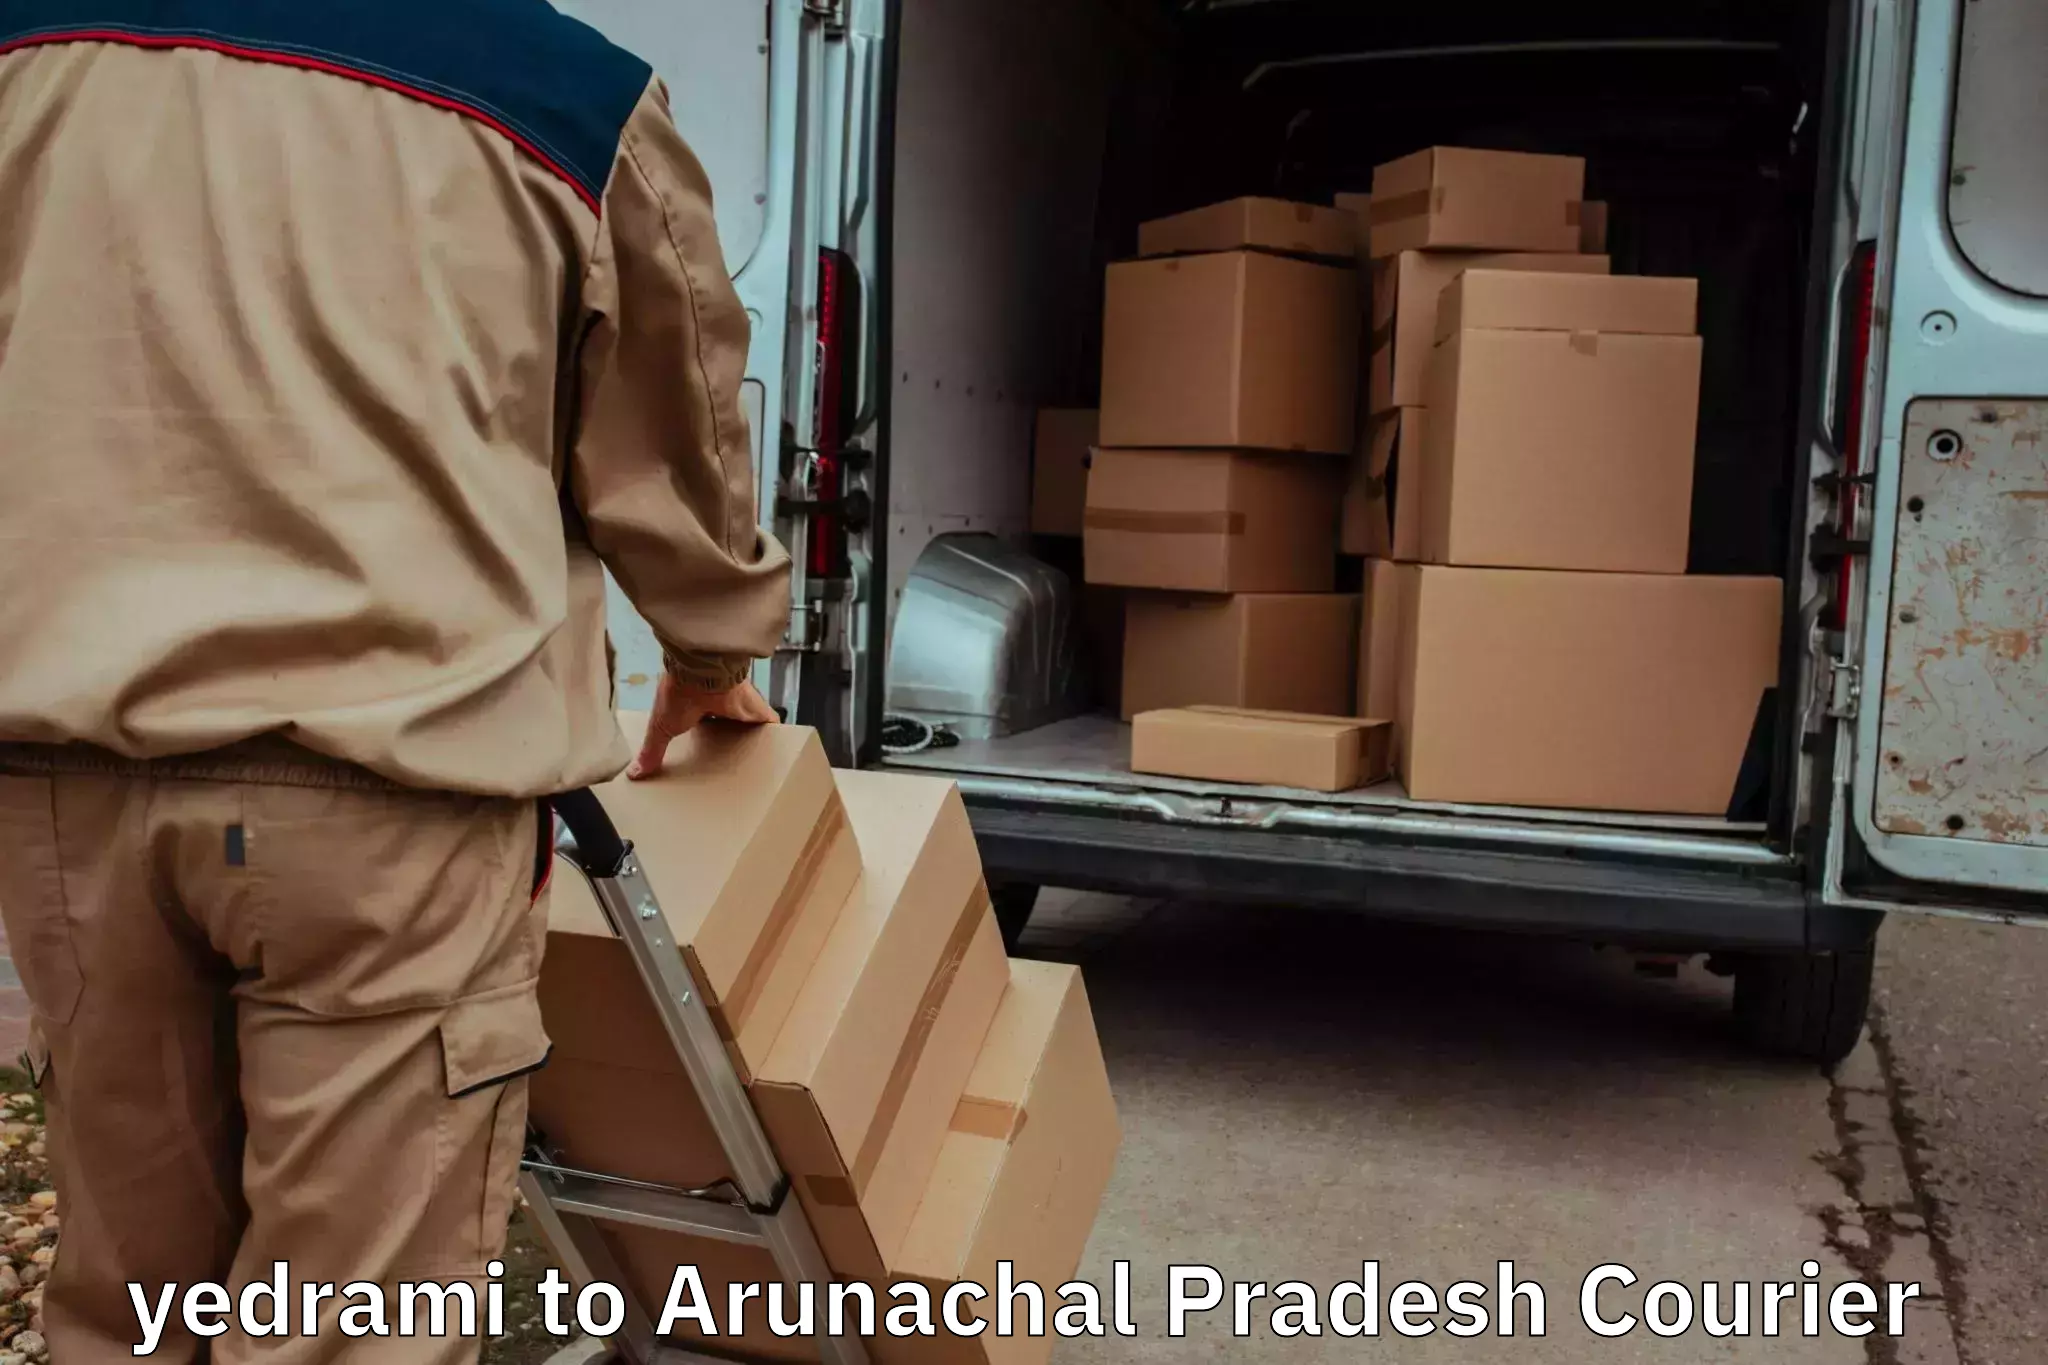 Moving and storage services yedrami to Arunachal Pradesh